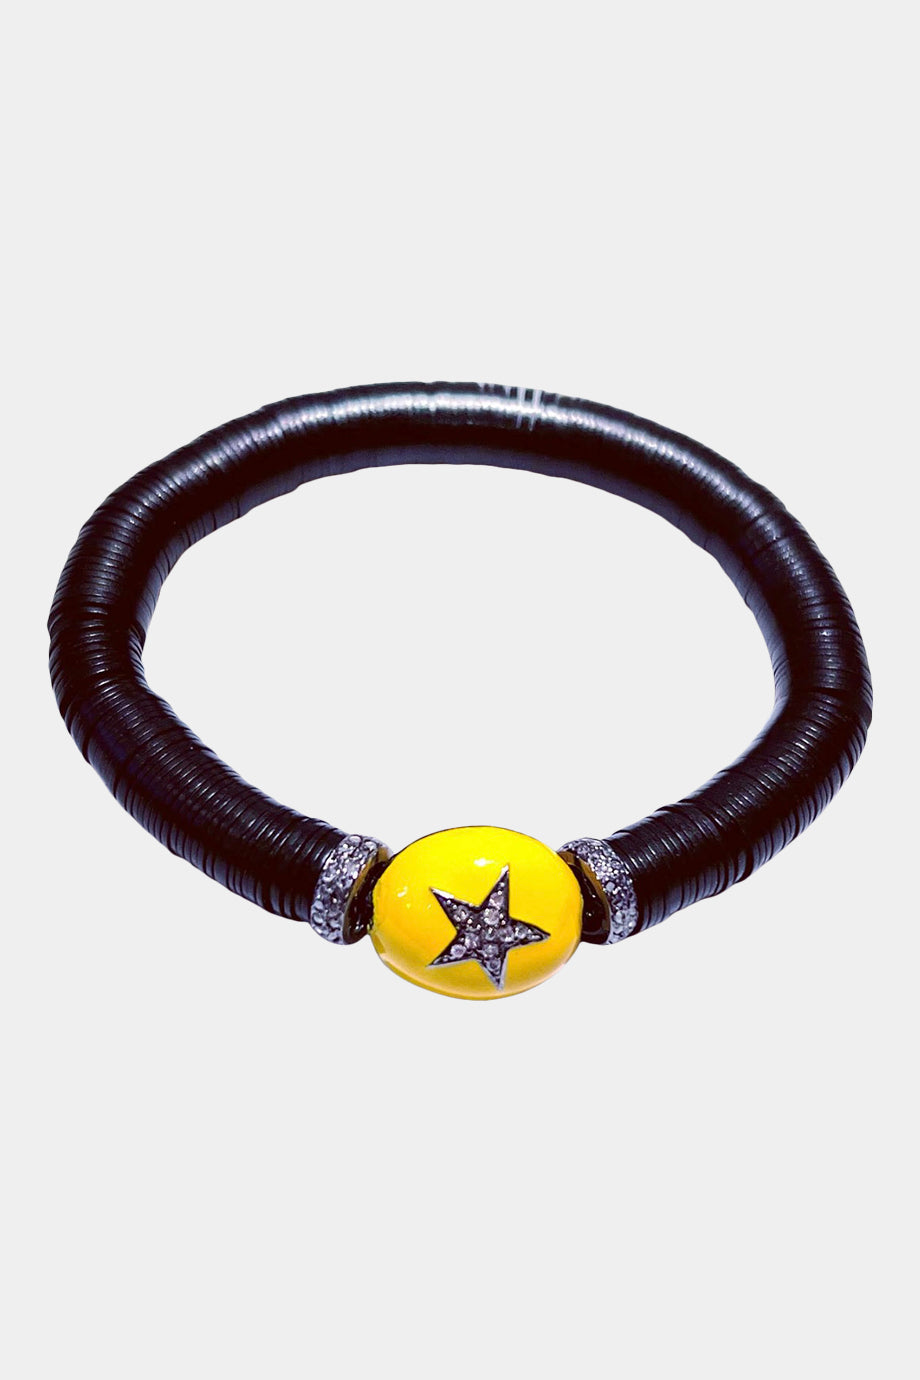 Black Vinyl Bracelet with Yellow Enamel Star